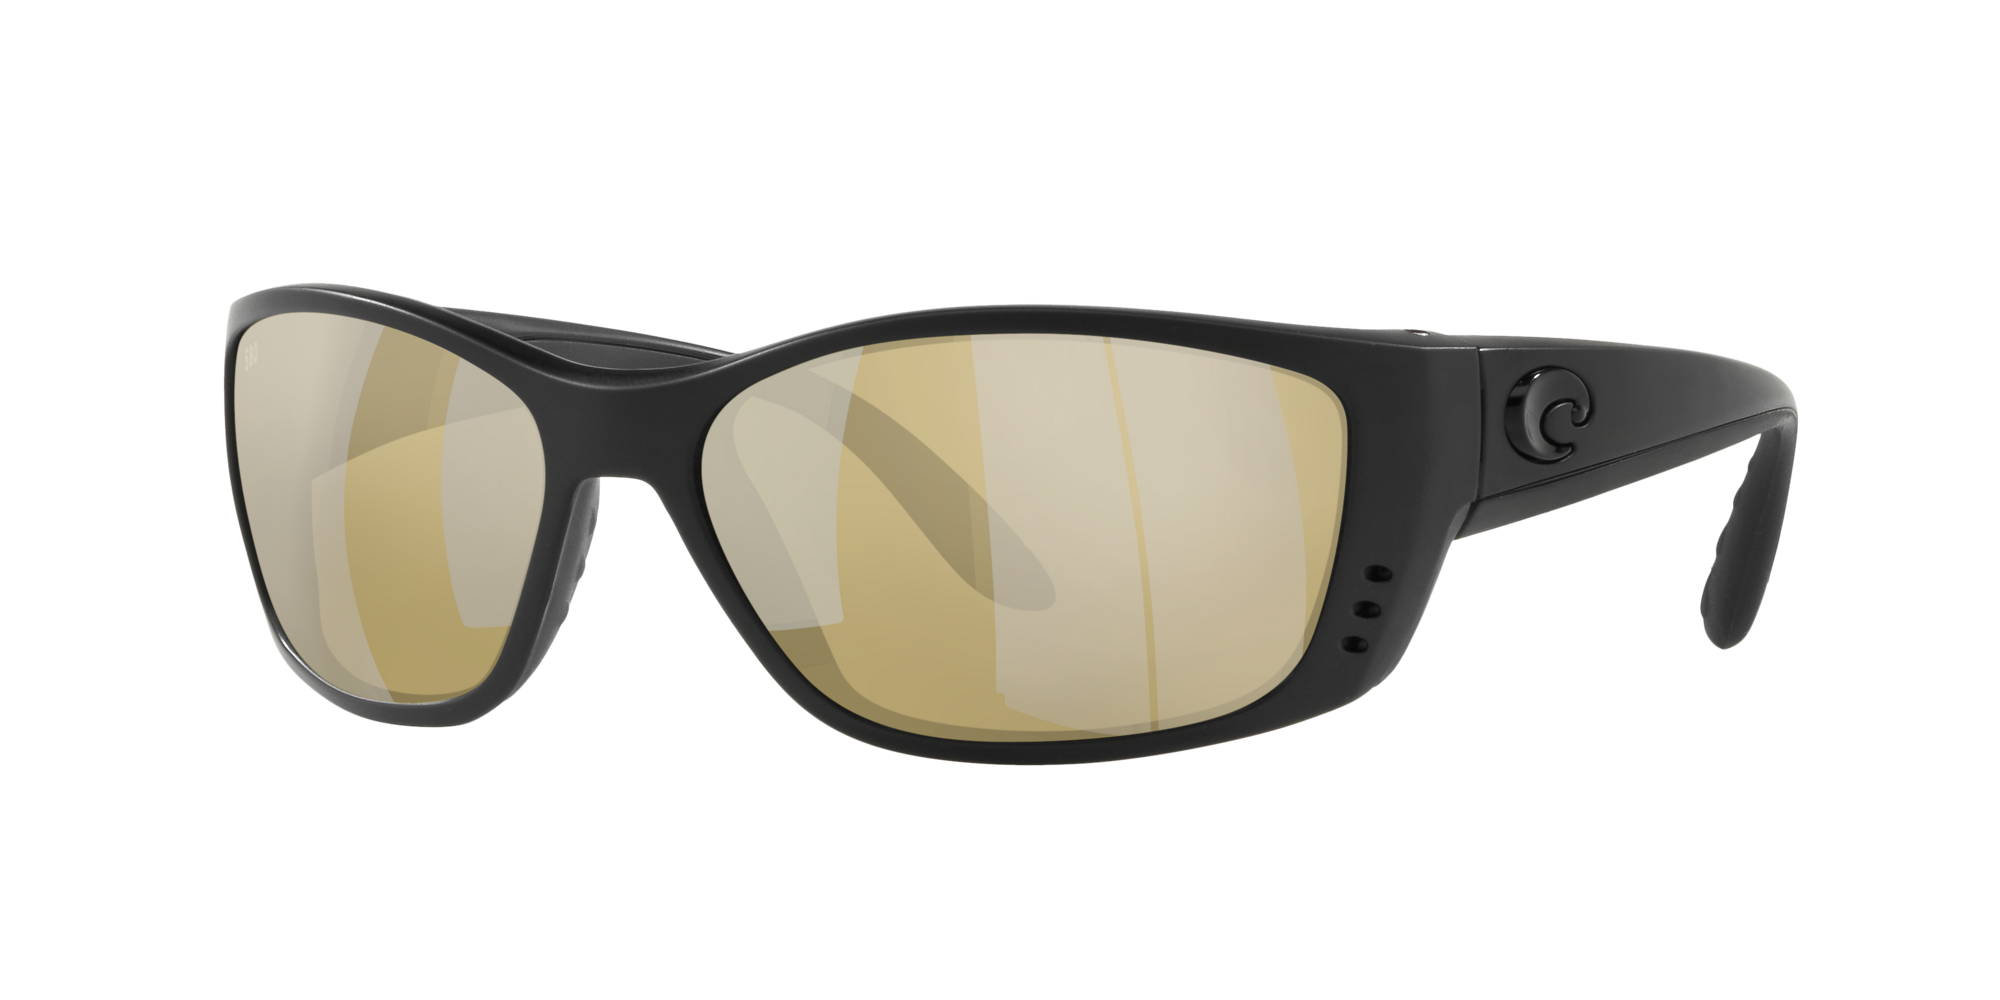 COSTA DEL MAR 580G Fisch POLARIZED Sunglasses Blackout/Silver 580 Glass NEW $249 